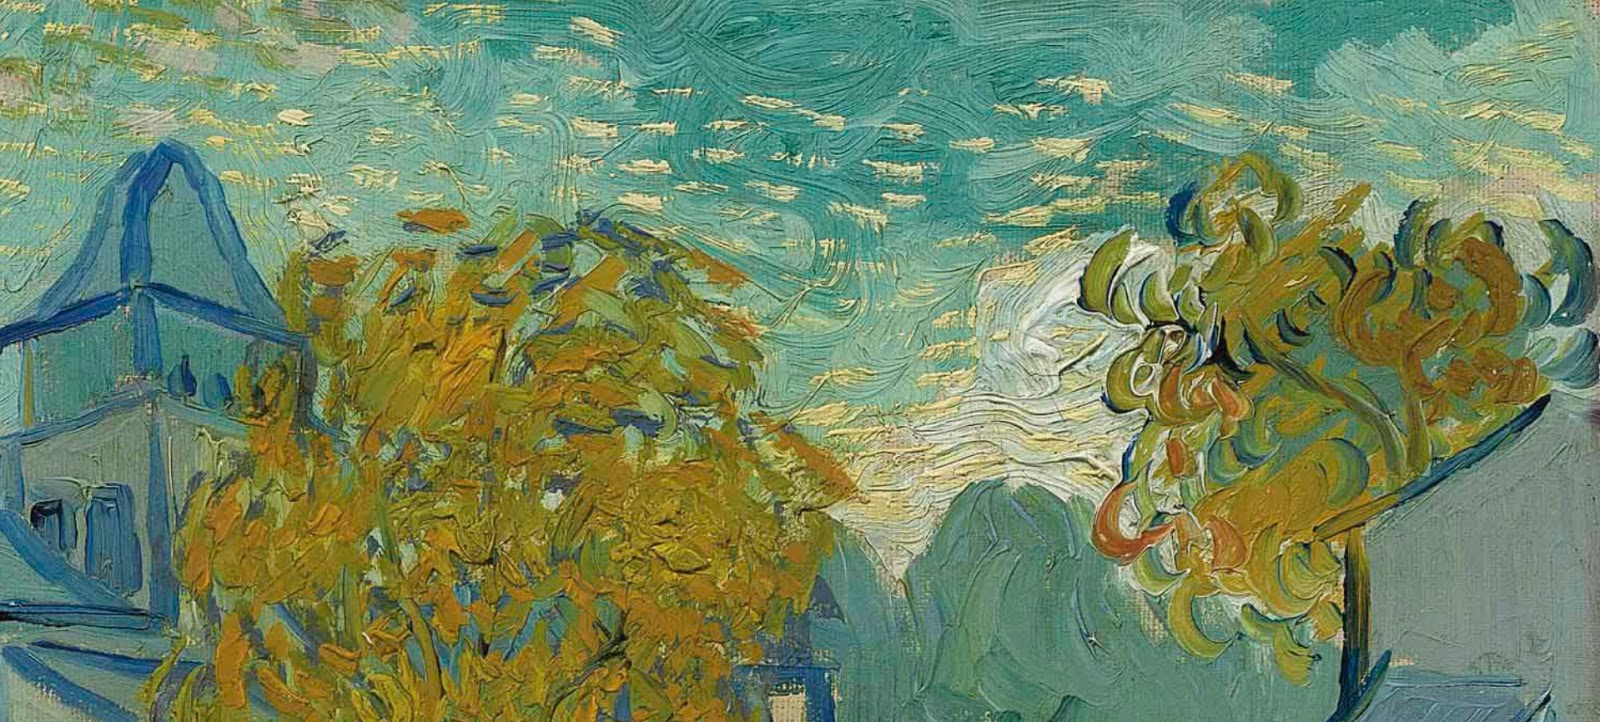 Vincent+Van+Gogh-1853-1890 (500).jpg